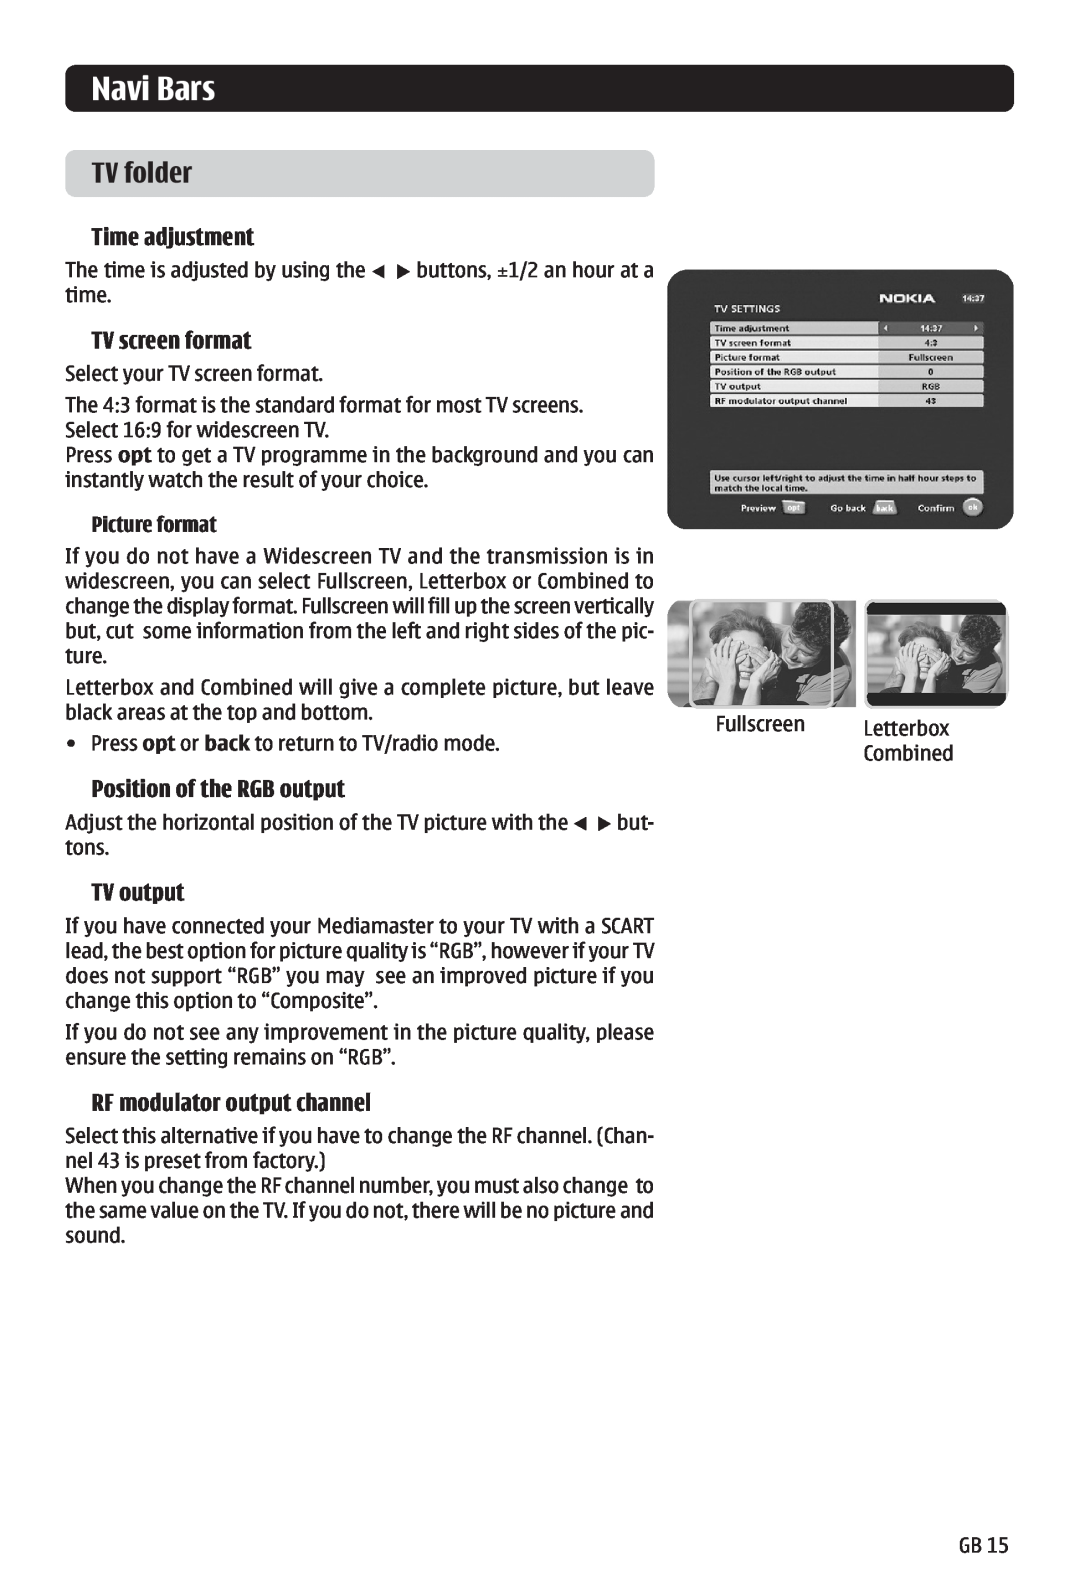 Nokia 121 T manual TV folder, Navi Bars, Time adjustment, TV screen format, Position of the RGB output, TV output 